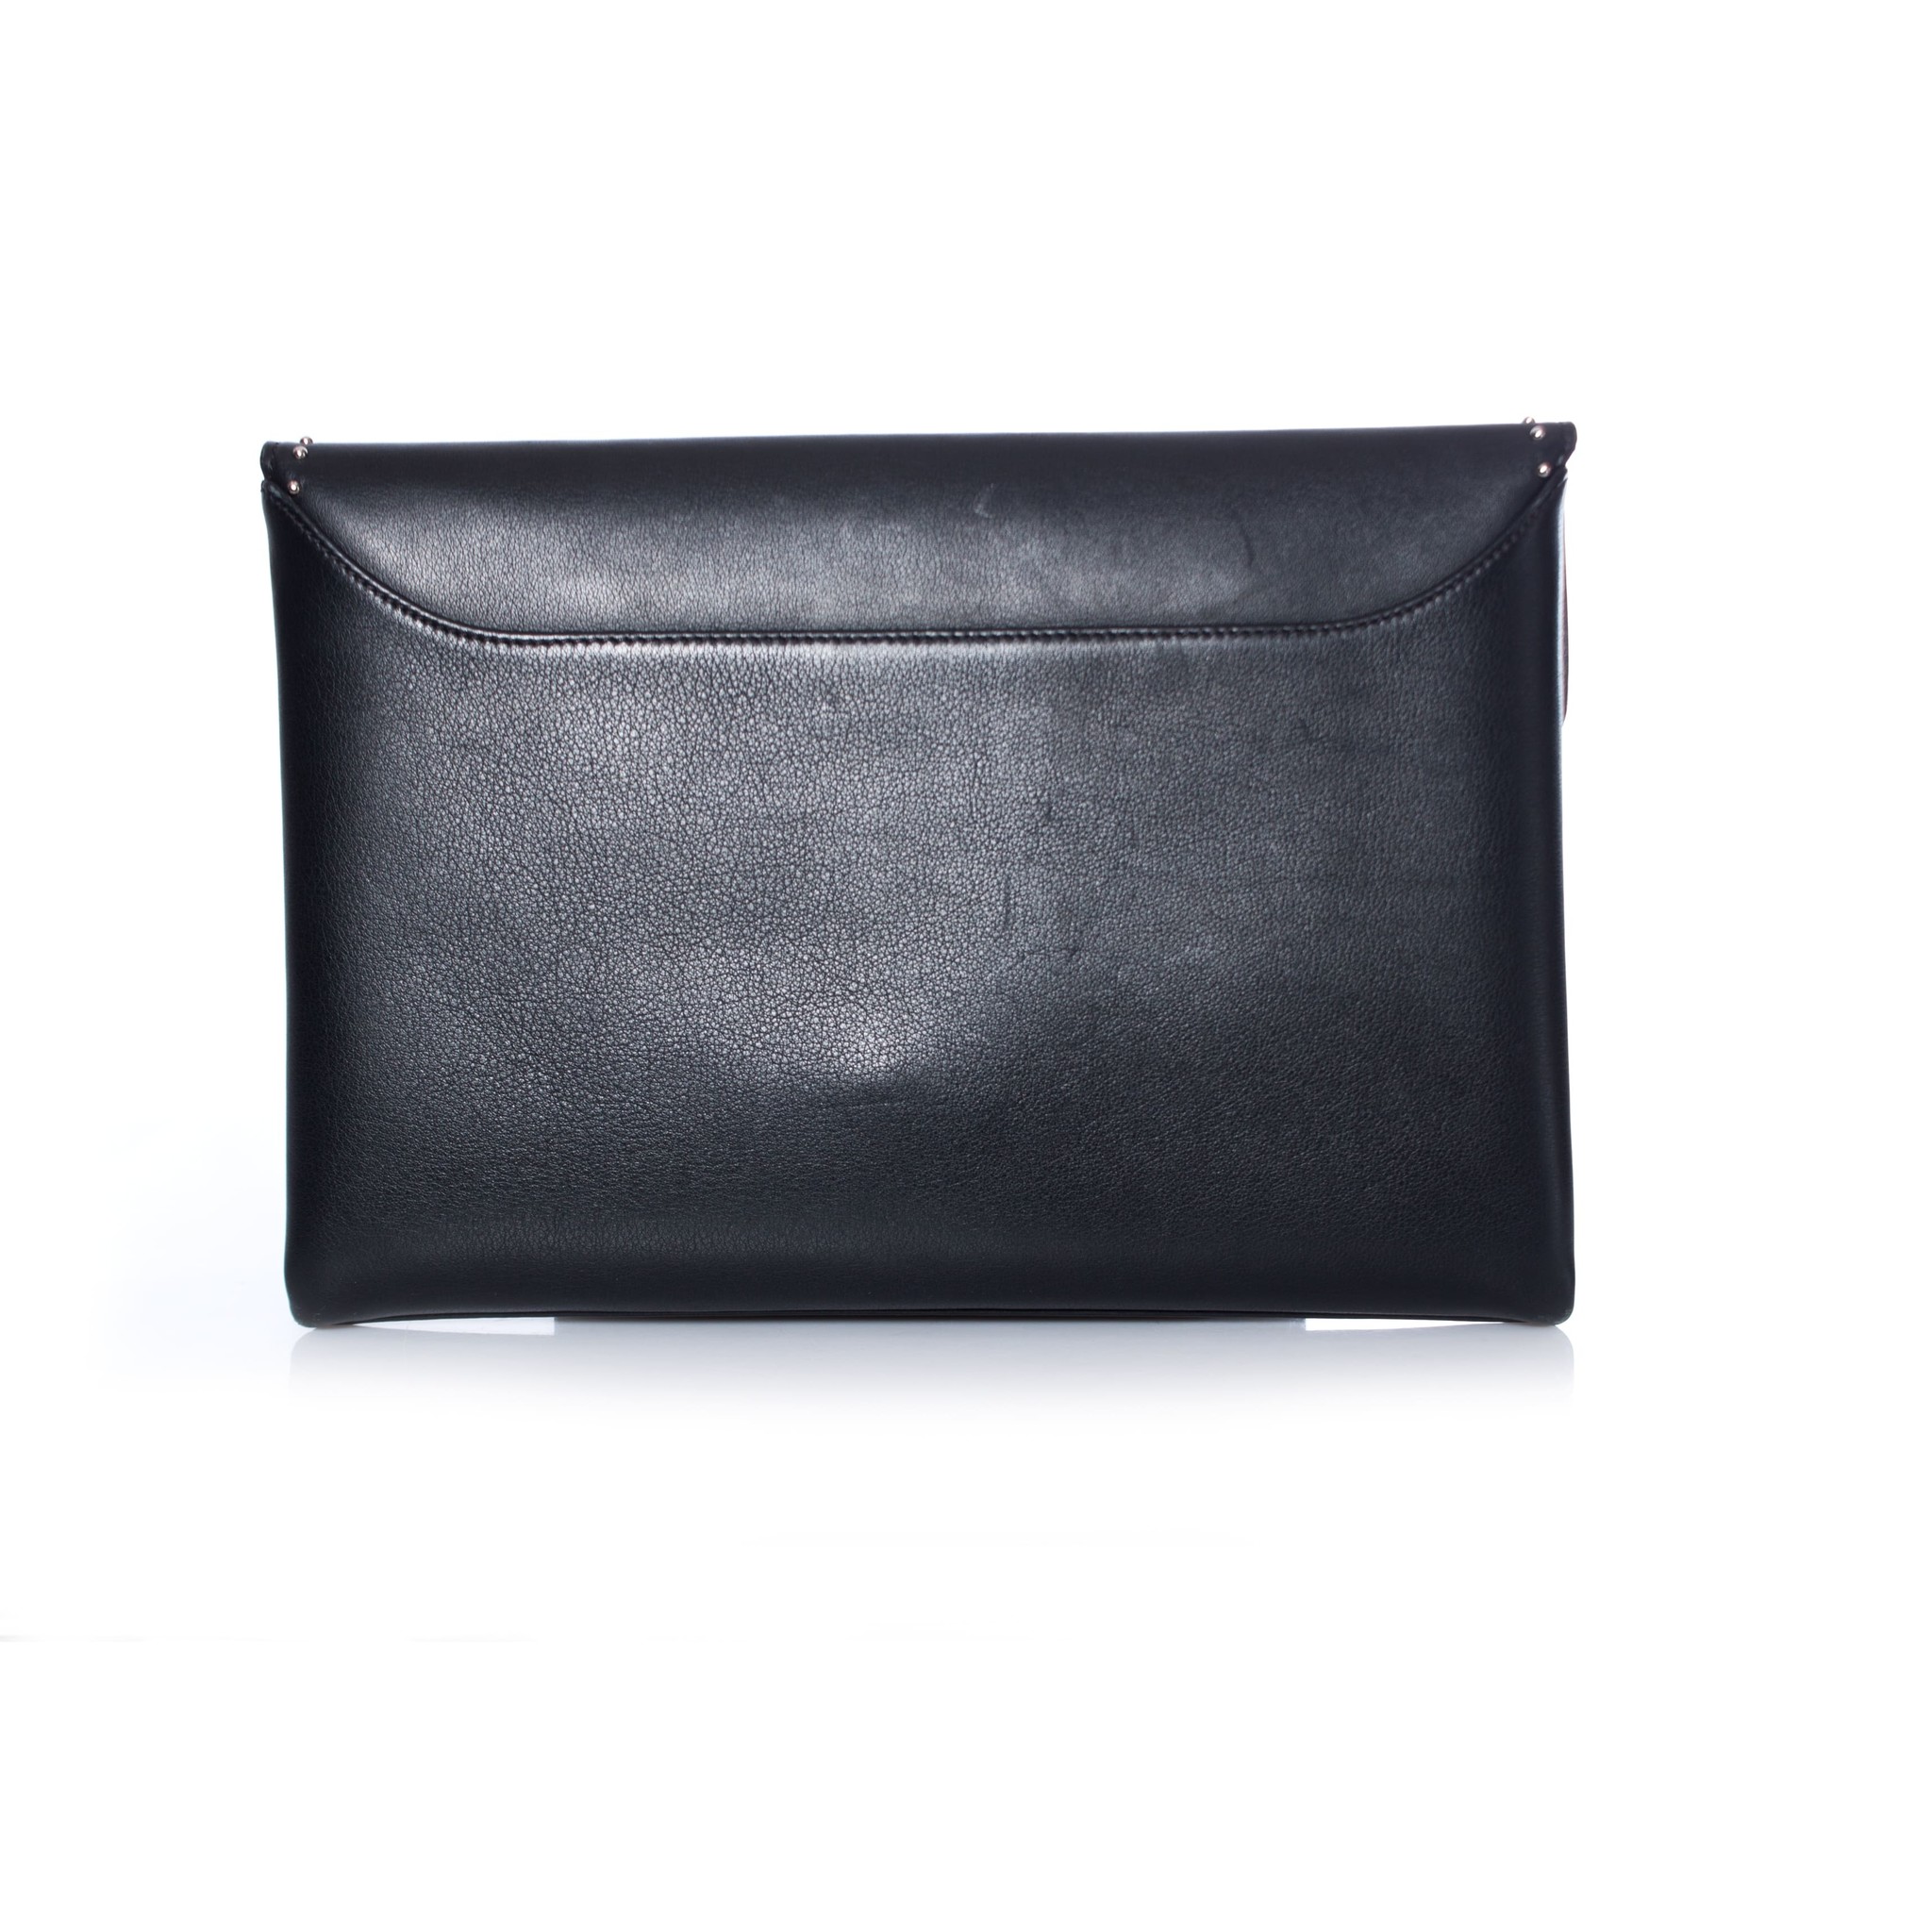 Givenchy - Antigona Mini Polished Leather Bag Black